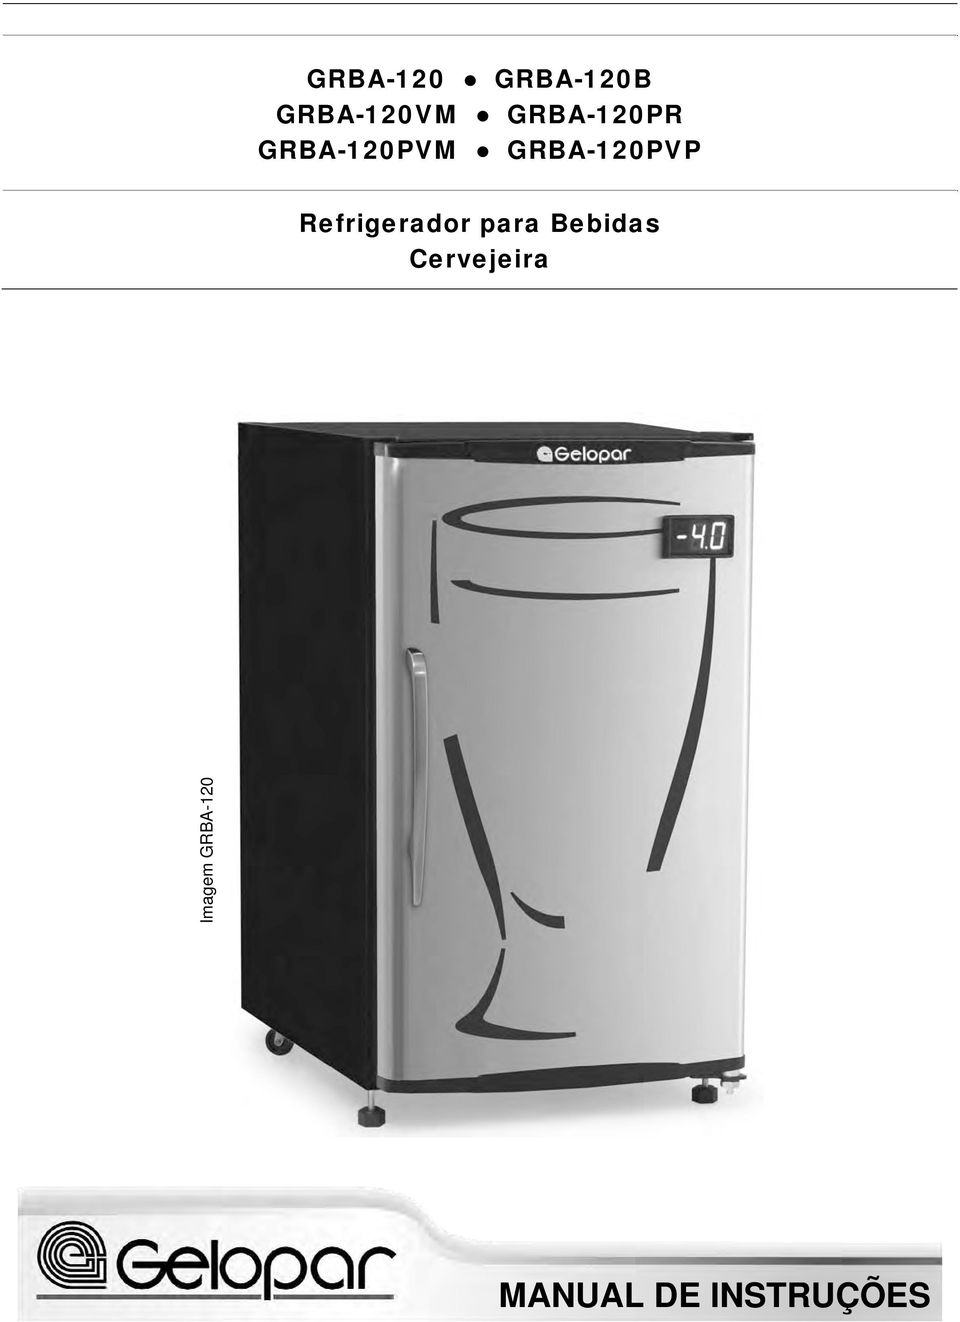 Refrigerador para Bebidas